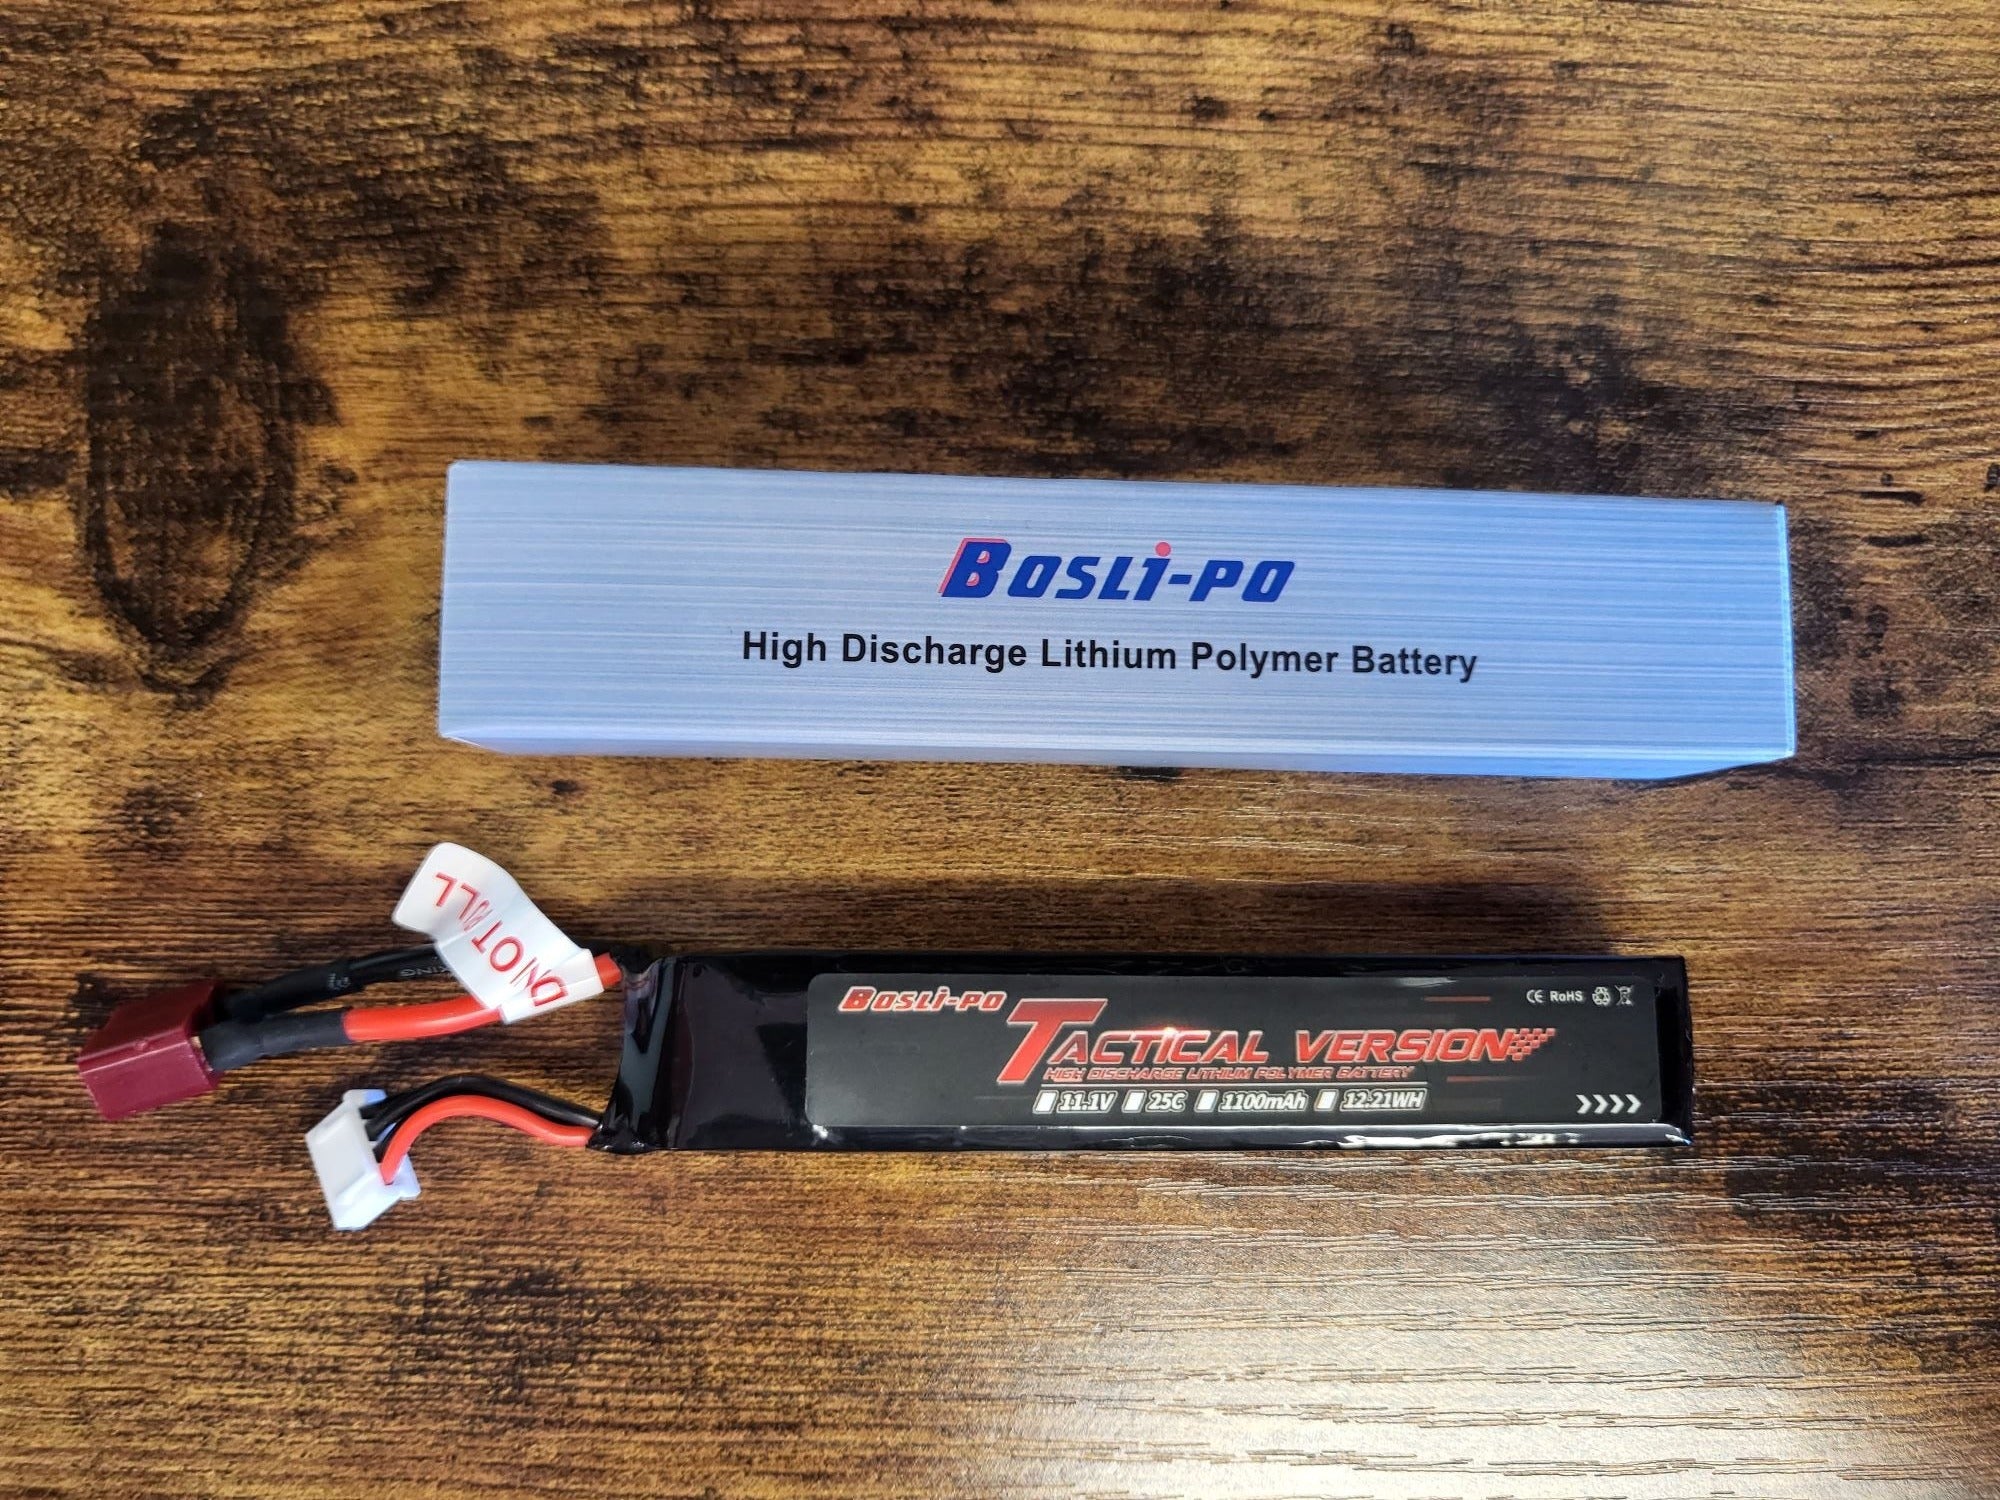 Bosli-po Li-Po Battery 11.1v 25c 1100mAH - WyshTech